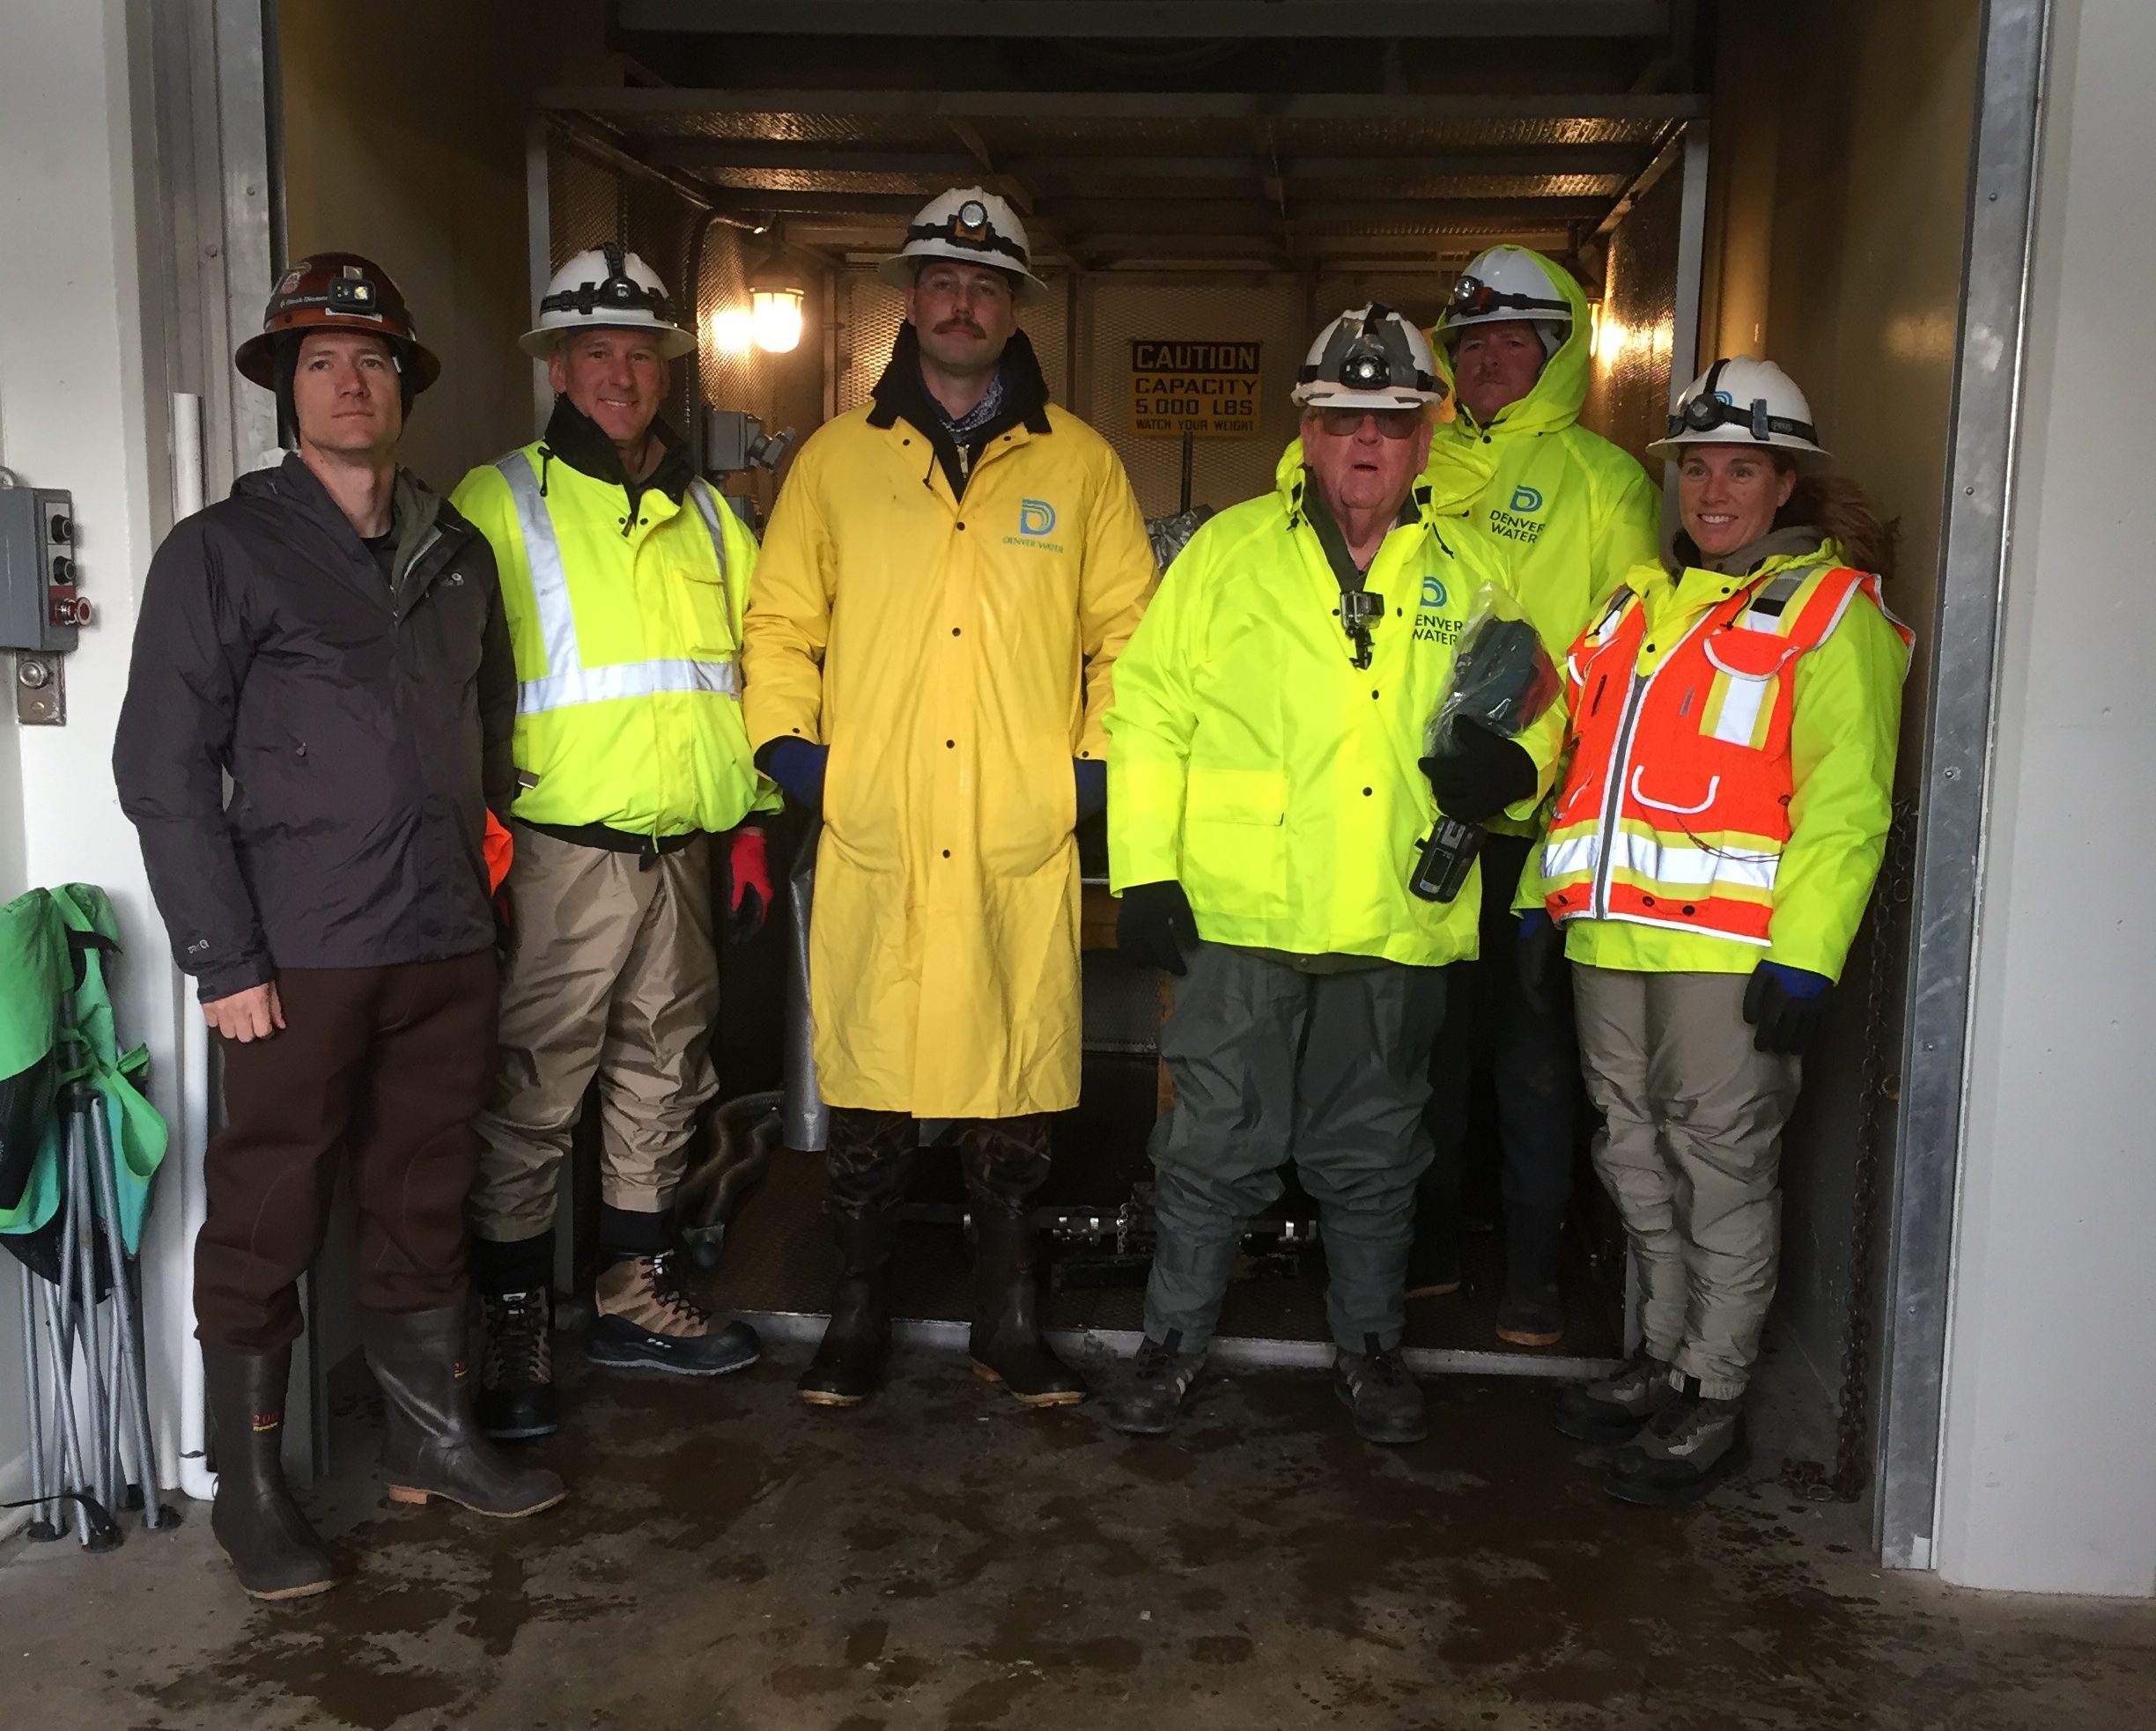 Inspection Team left to right: Nate Soule, Lithos Engineering inspector; Tim Holinka, West Slope operations supervisor; Garret Miller, Roberts Tunnel supervisor; Doug Sandrock, safety specialist; Jay Dankowski, mechanic; Erin Gleason, dam safety engineer.